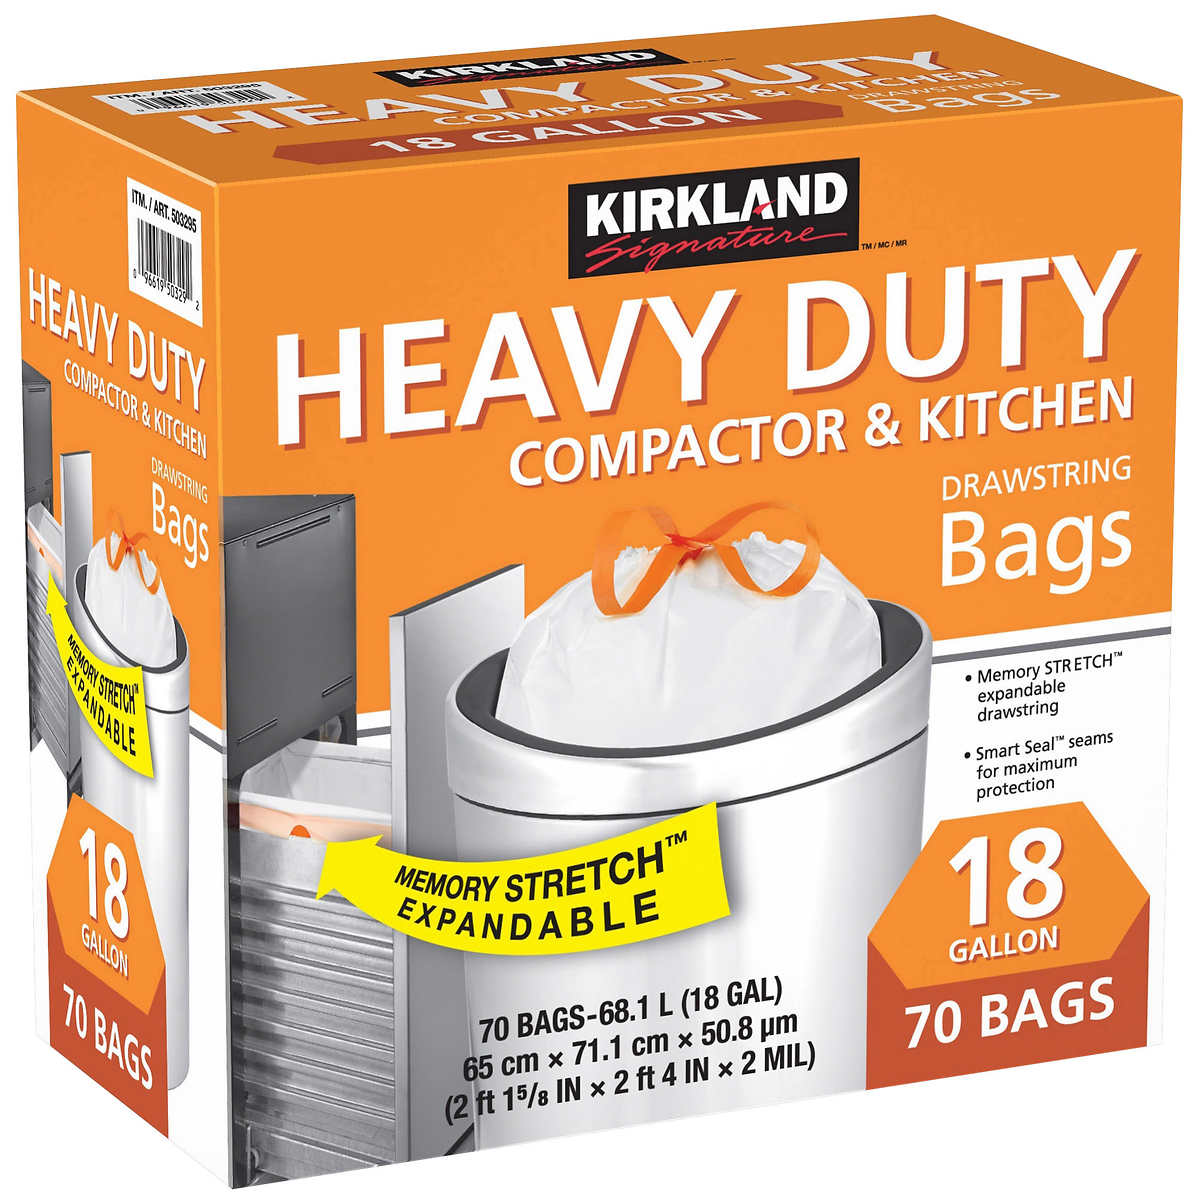 Kirkland Heavy Duty Compactor & Kitchen Trash Bags 18 Gallon 70 bags 